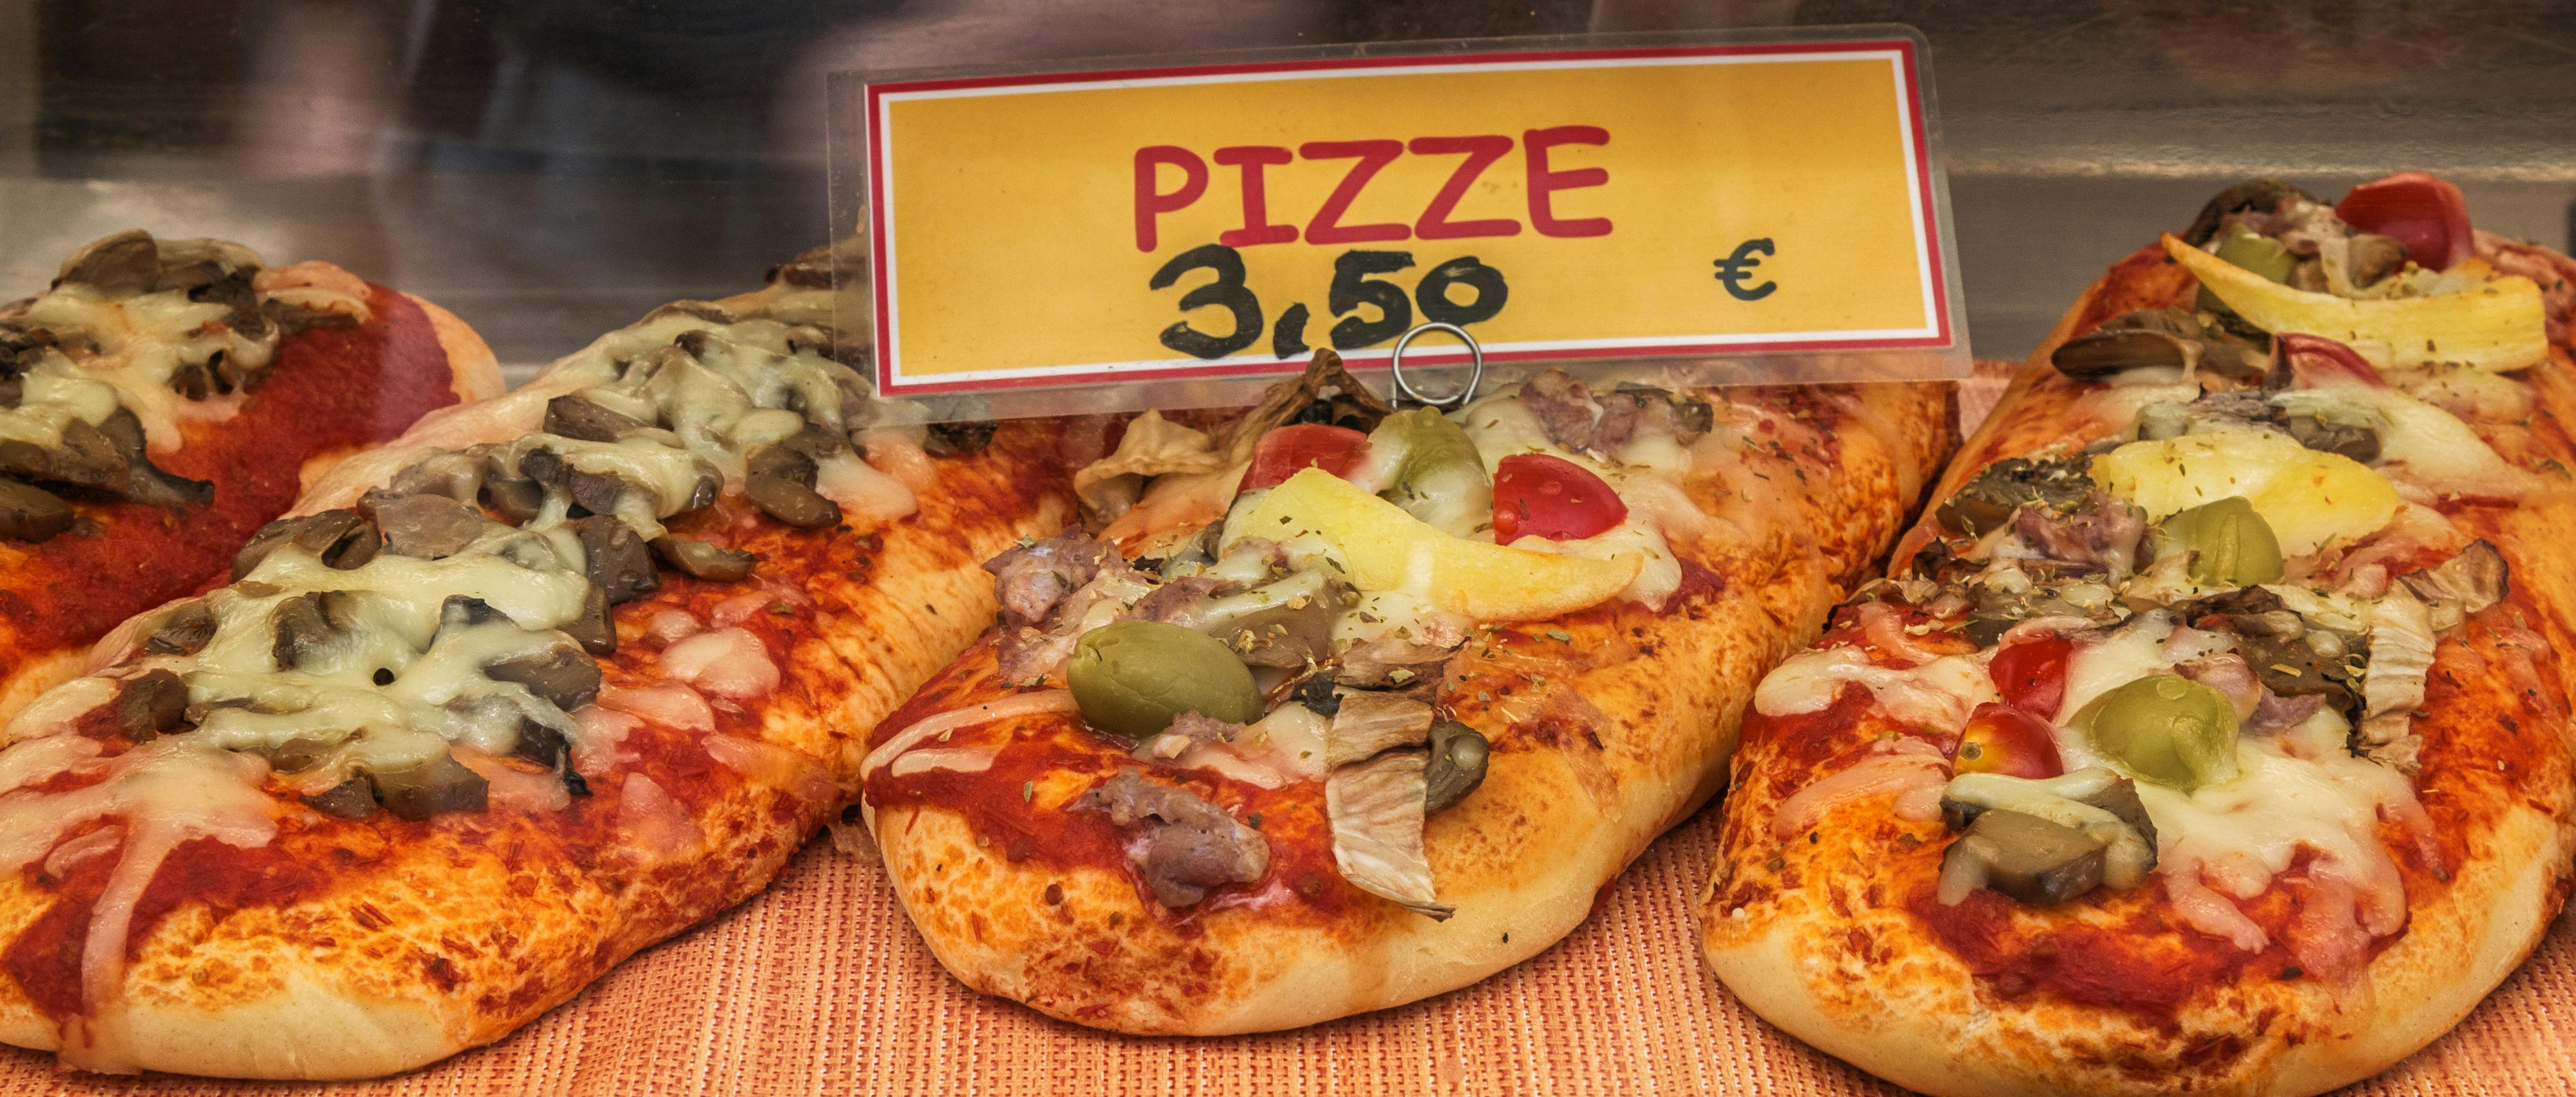 Free stock photo of Italian food, meal, pizza